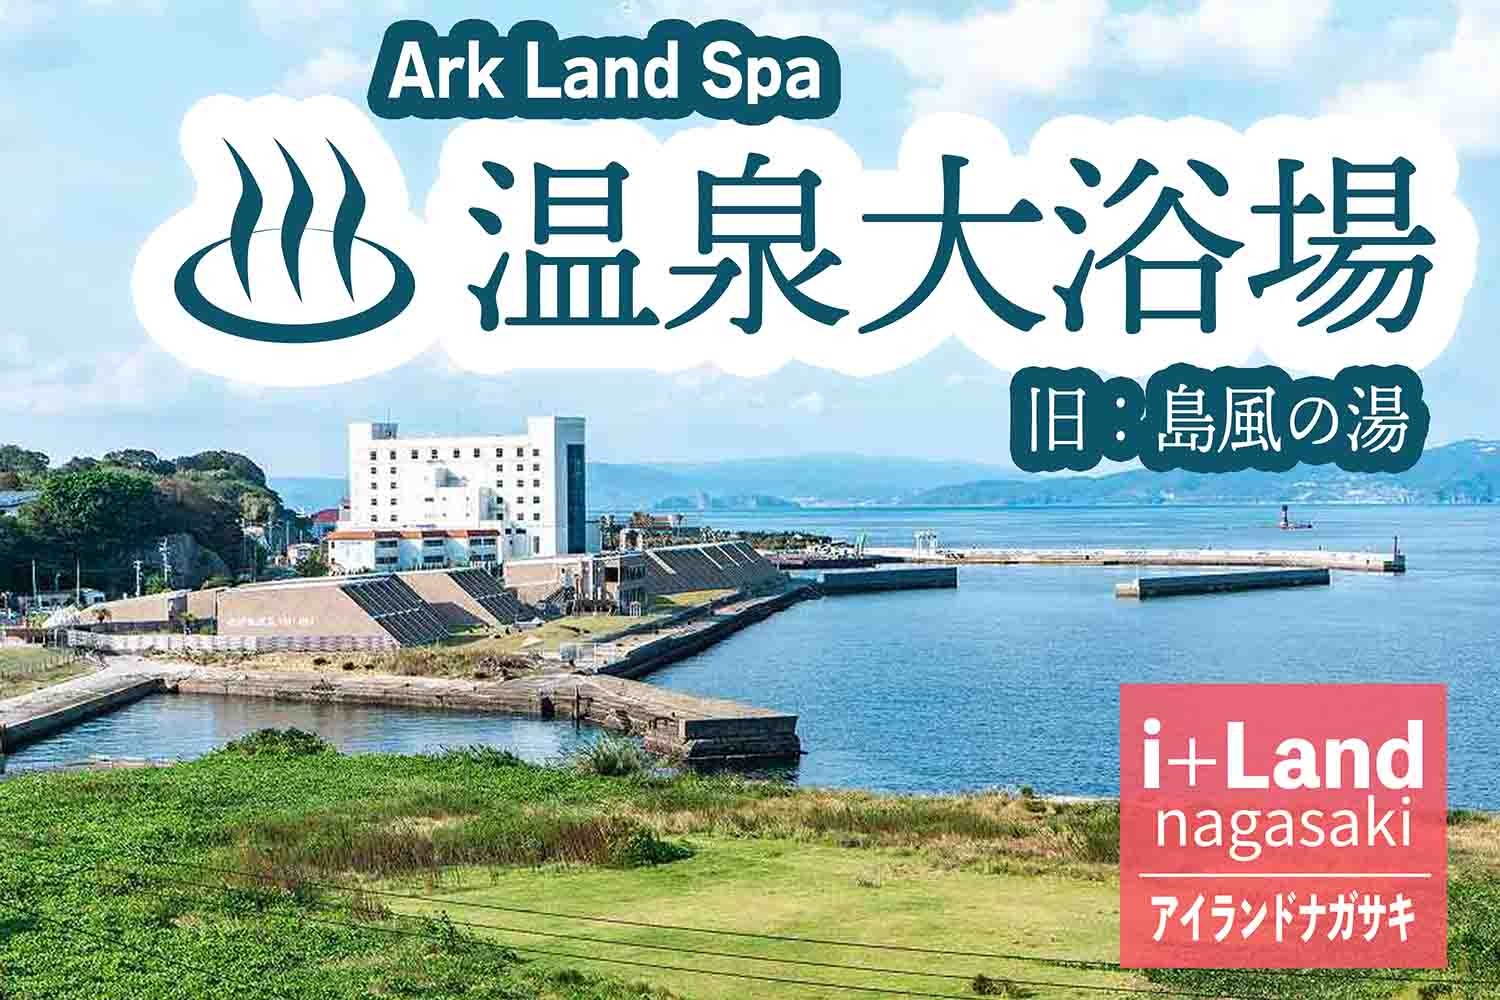 Ark Land Spa 温泉大浴場【i+Land nagasaki】